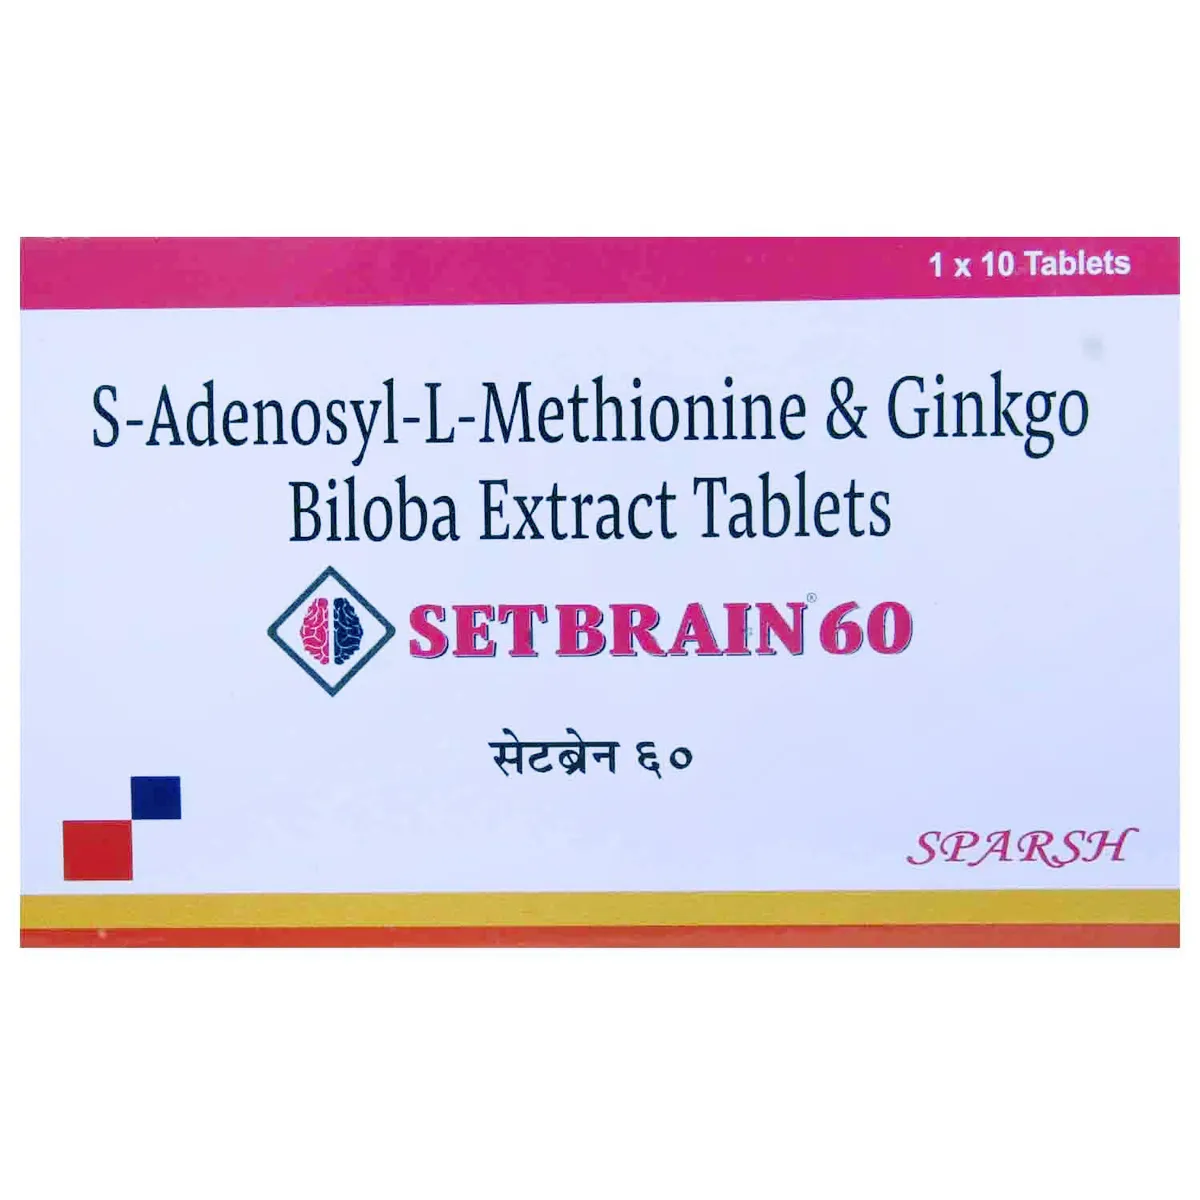 Setbrain 60 Tablet with S-Adenosyl-L-Methionine & Ginkgo Biloba Extract